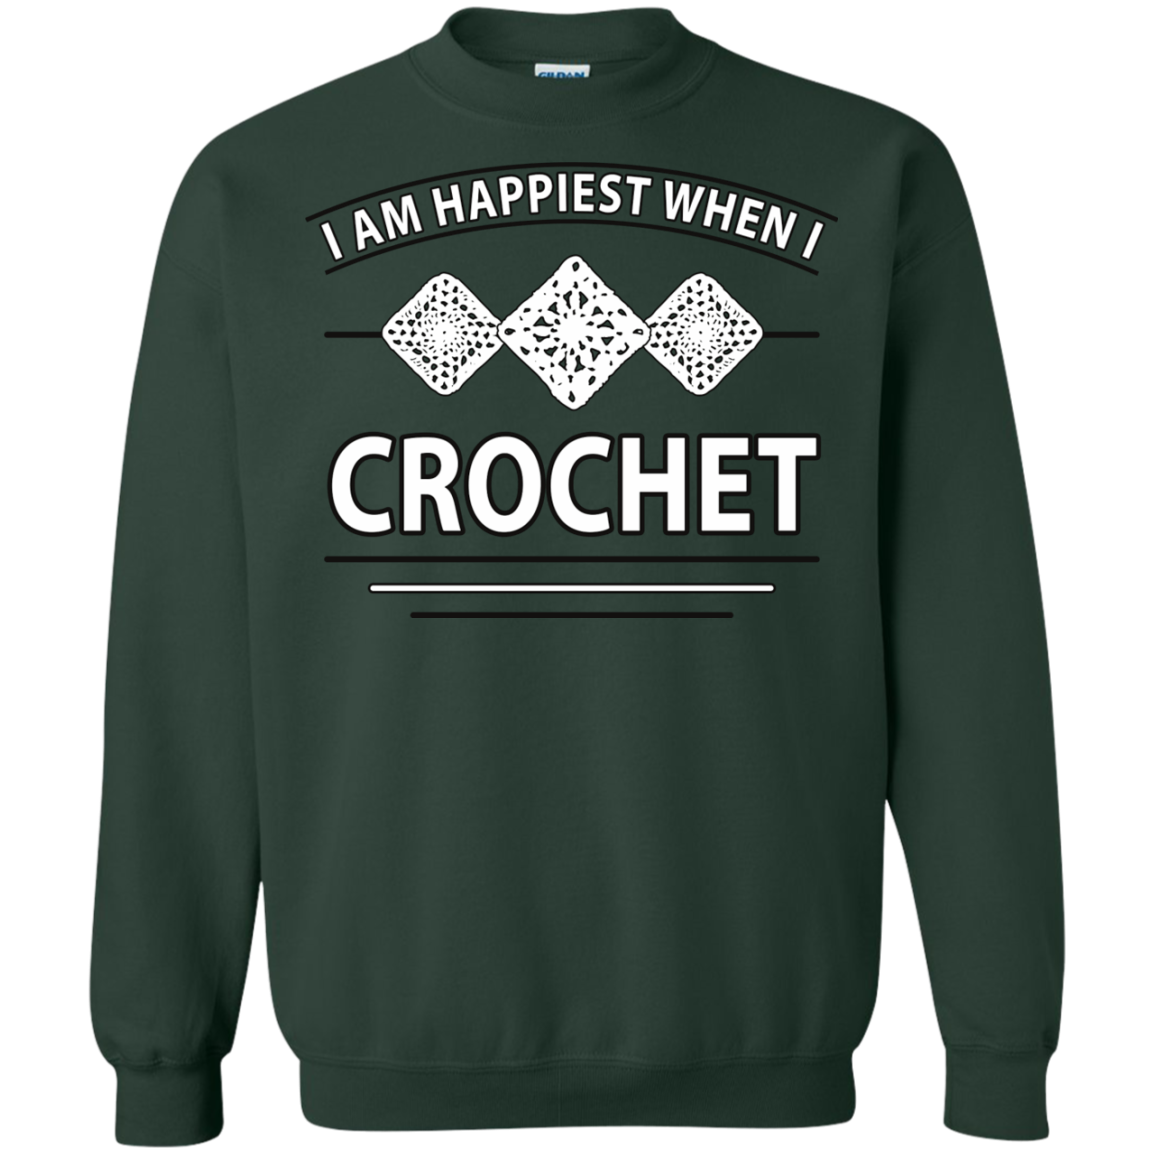 I Am Happiest When I Crochet Crewneck Sweatshirts - Crafter4Life - 5